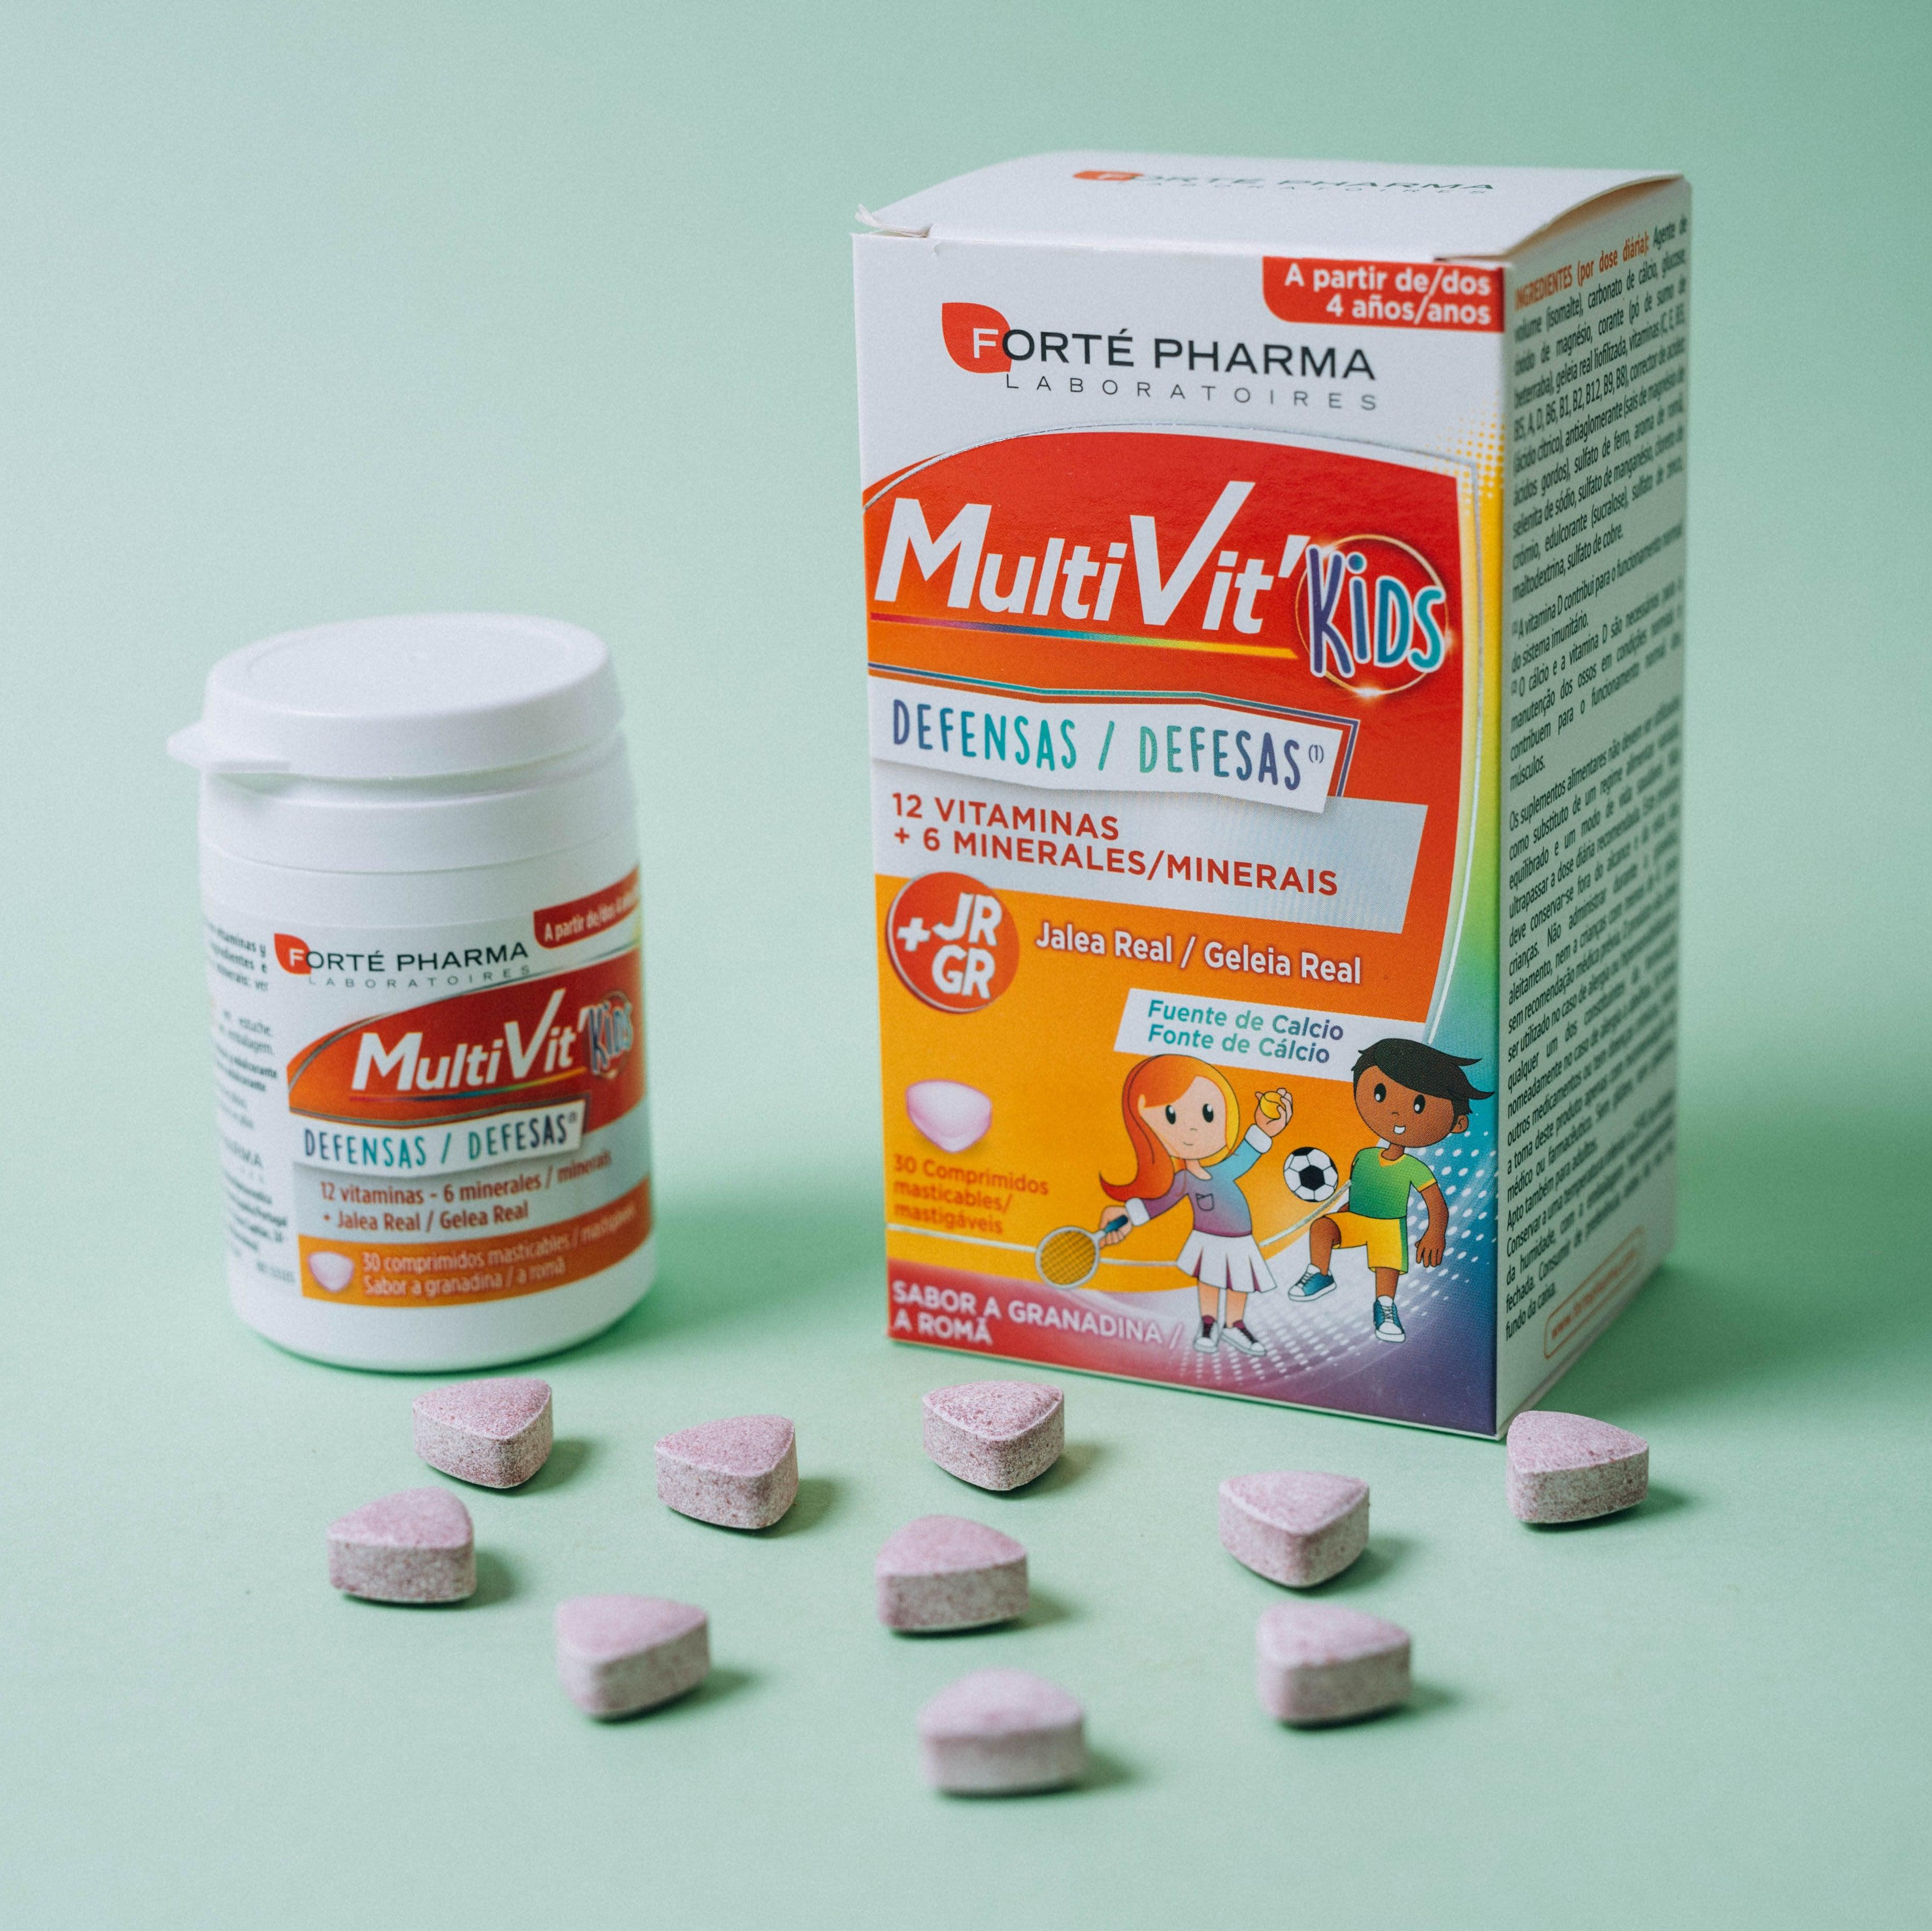 multivit kids-Defensas e Inmunidad-Forté Pharma